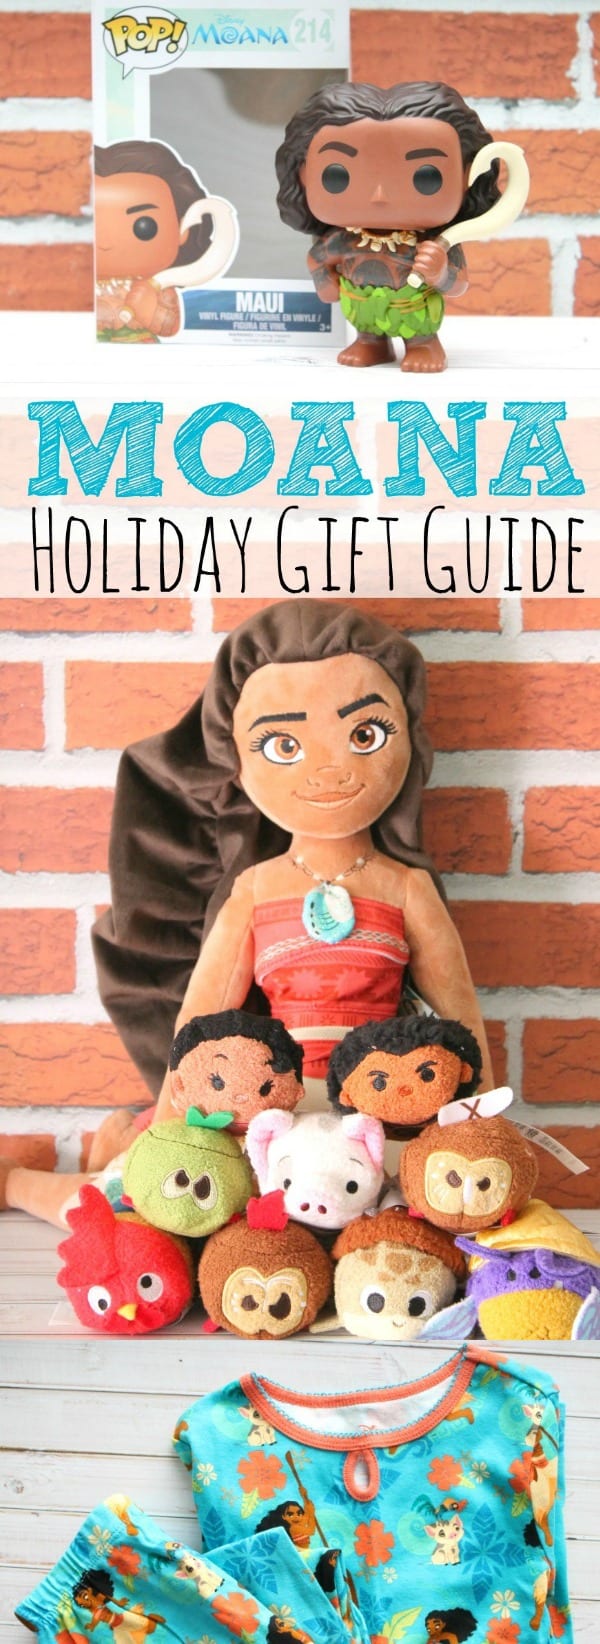 Moana Holiday Gift Guide Ideas